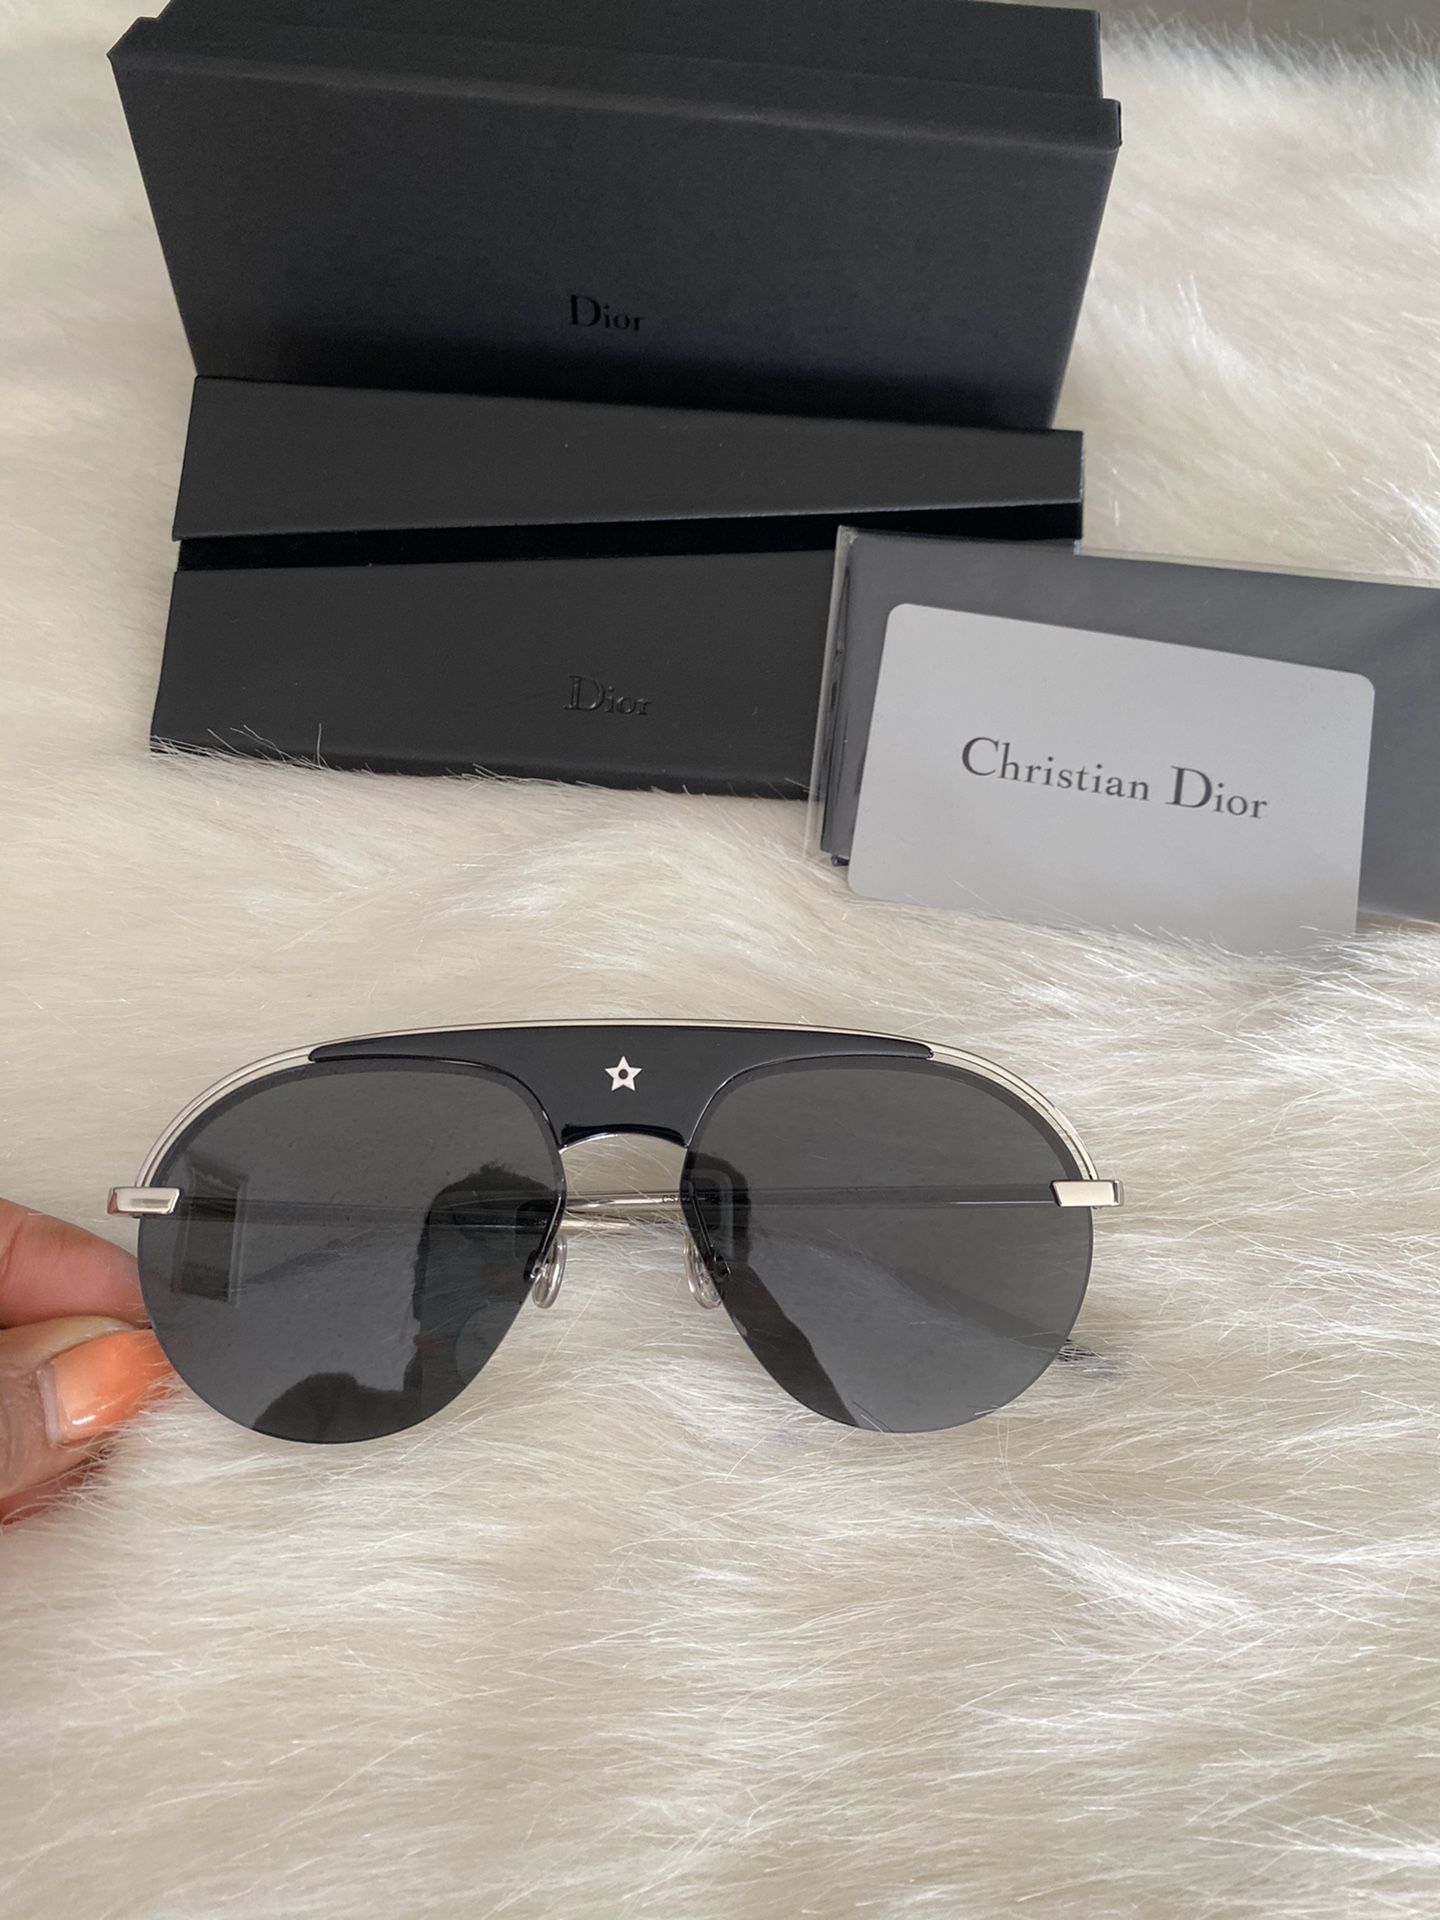 Dior evolution sunglasses